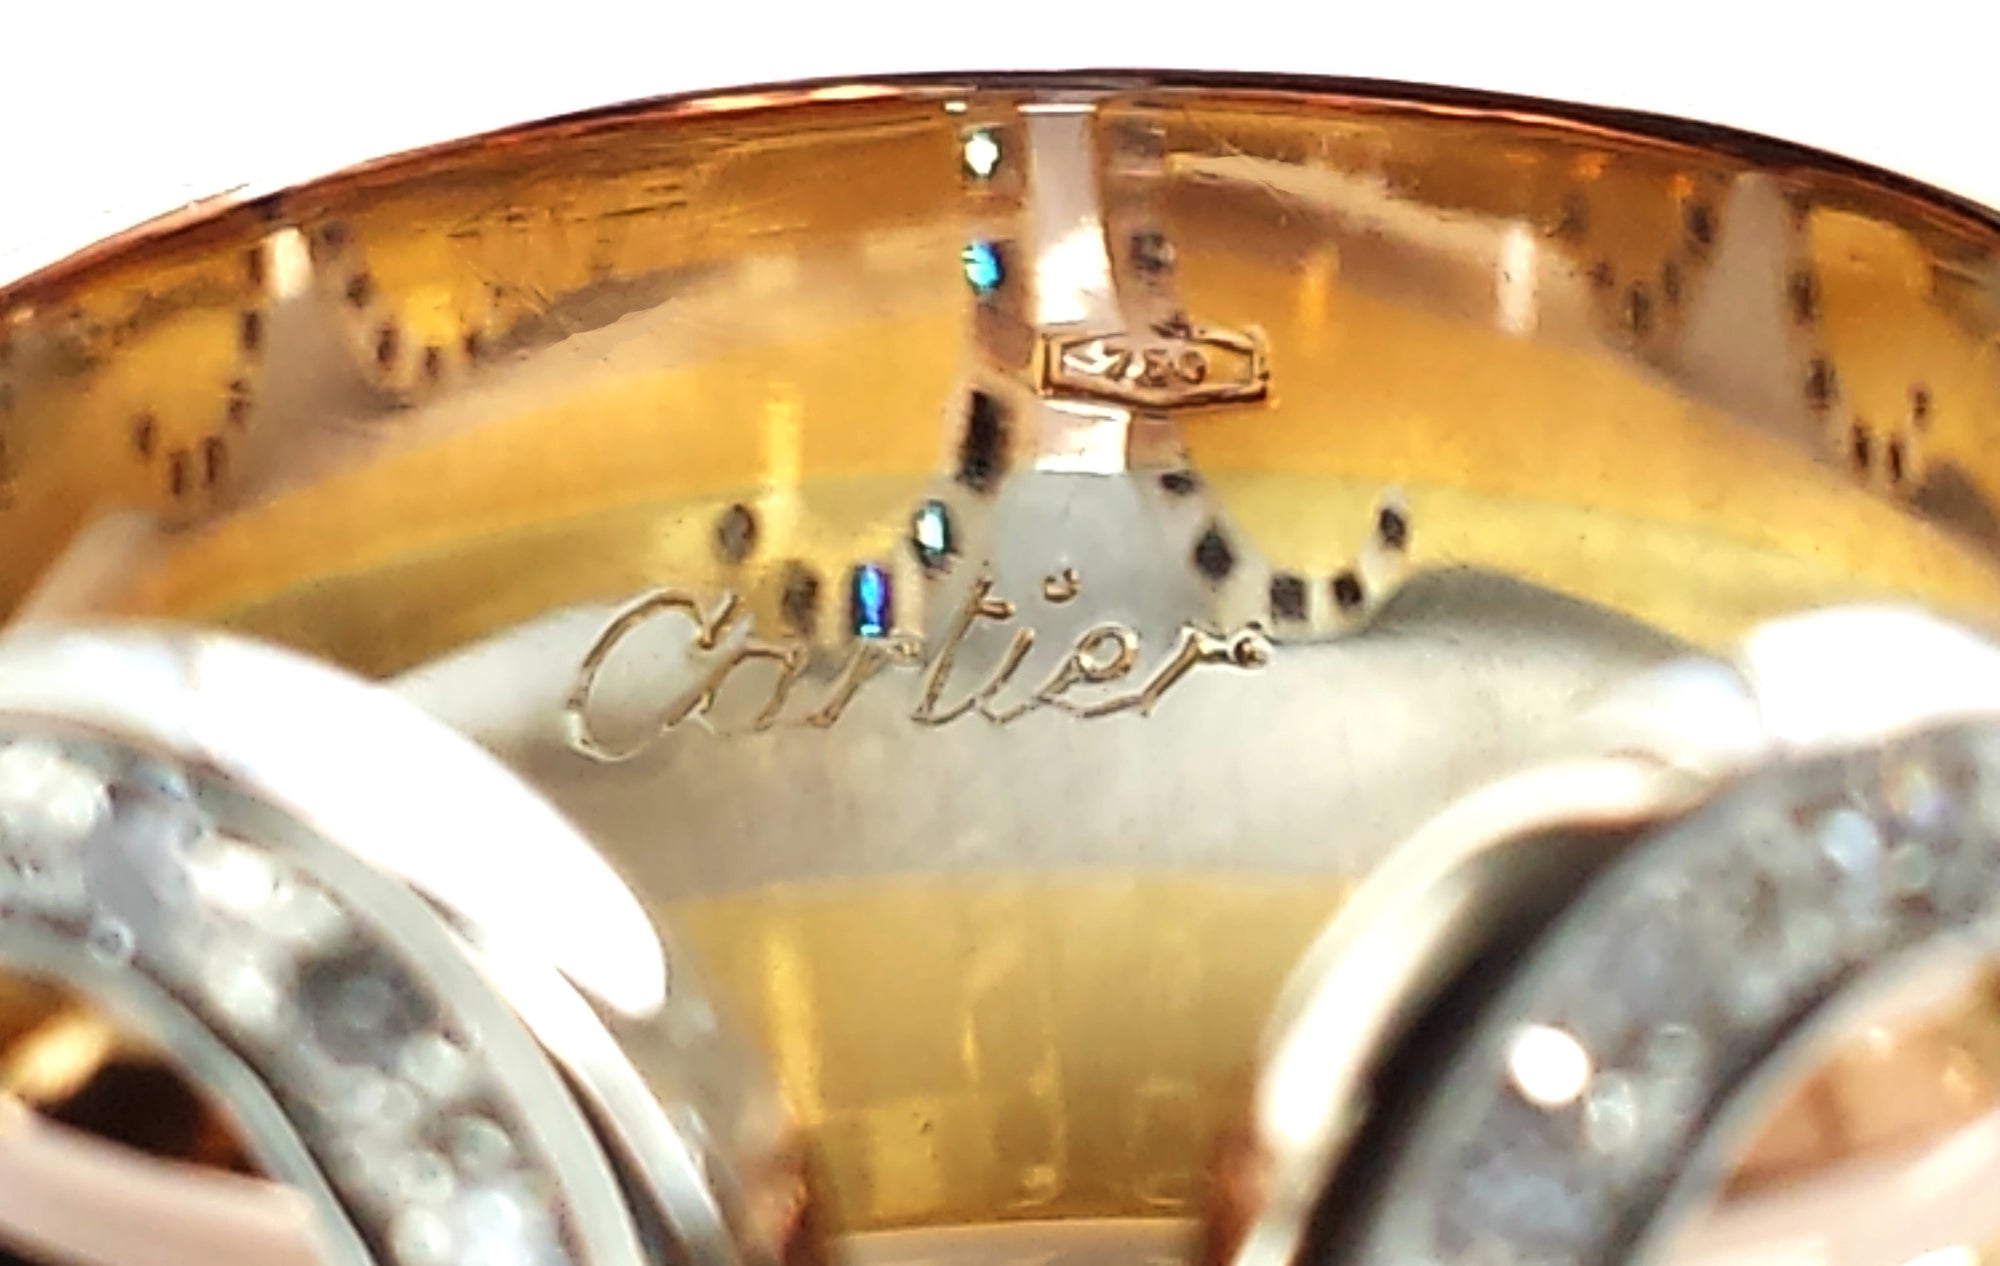 Cartier Double C 'de Cartier' Decor Trinity Ring in 18K Gold & Diamond Setting, Size 51